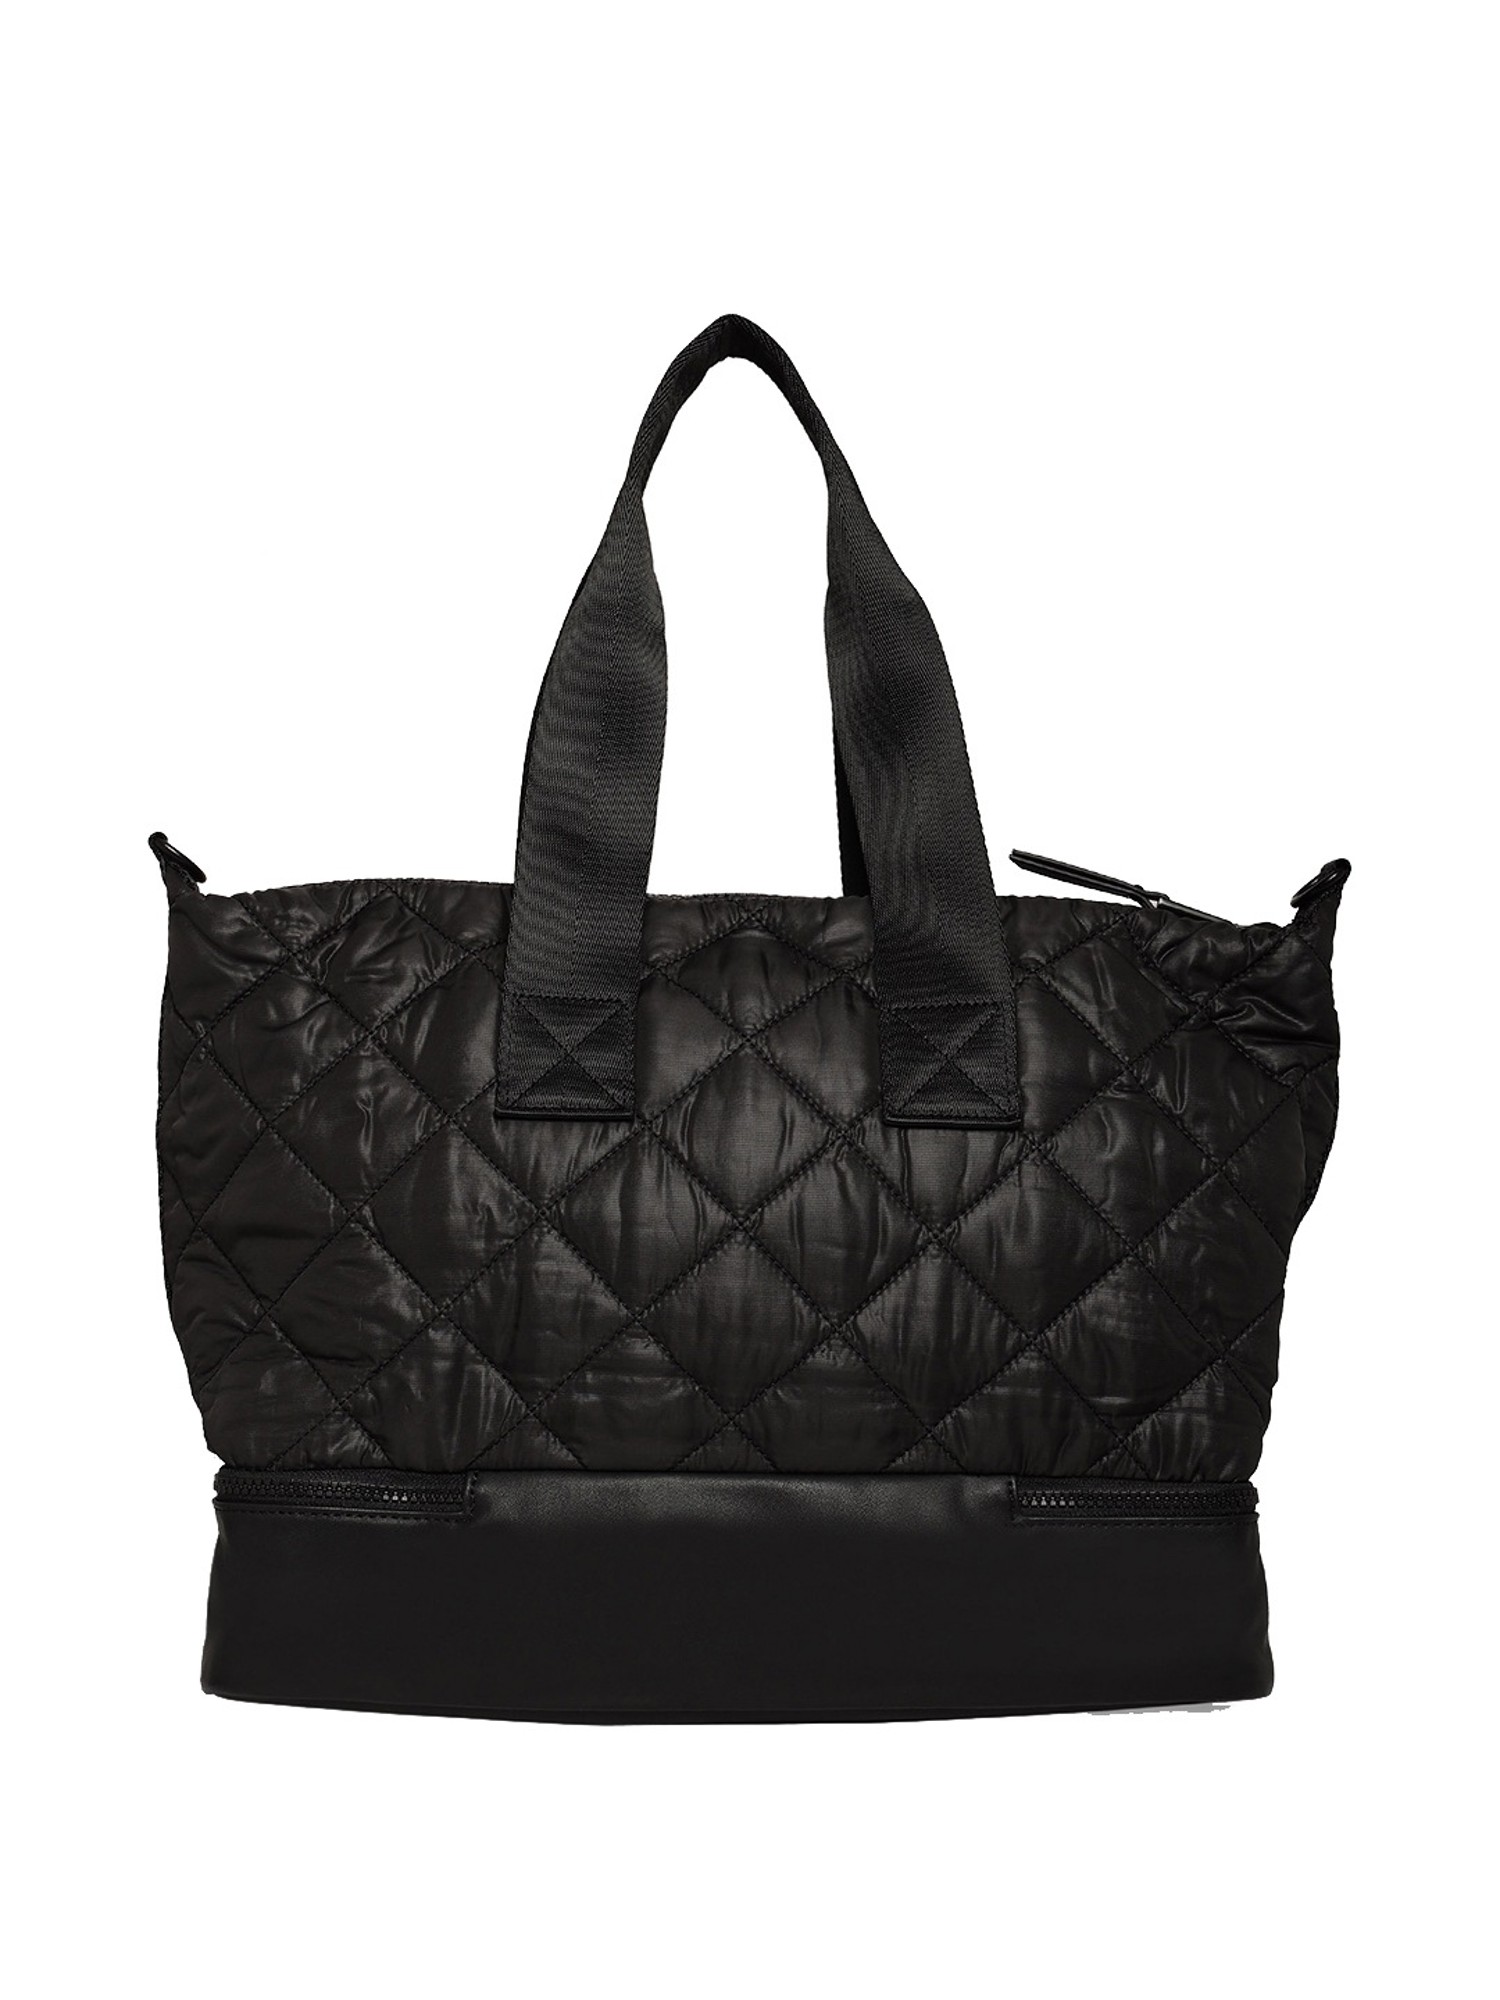 Buy Aldo PILINI Black Quilted Medium Tote Handbag For Women At